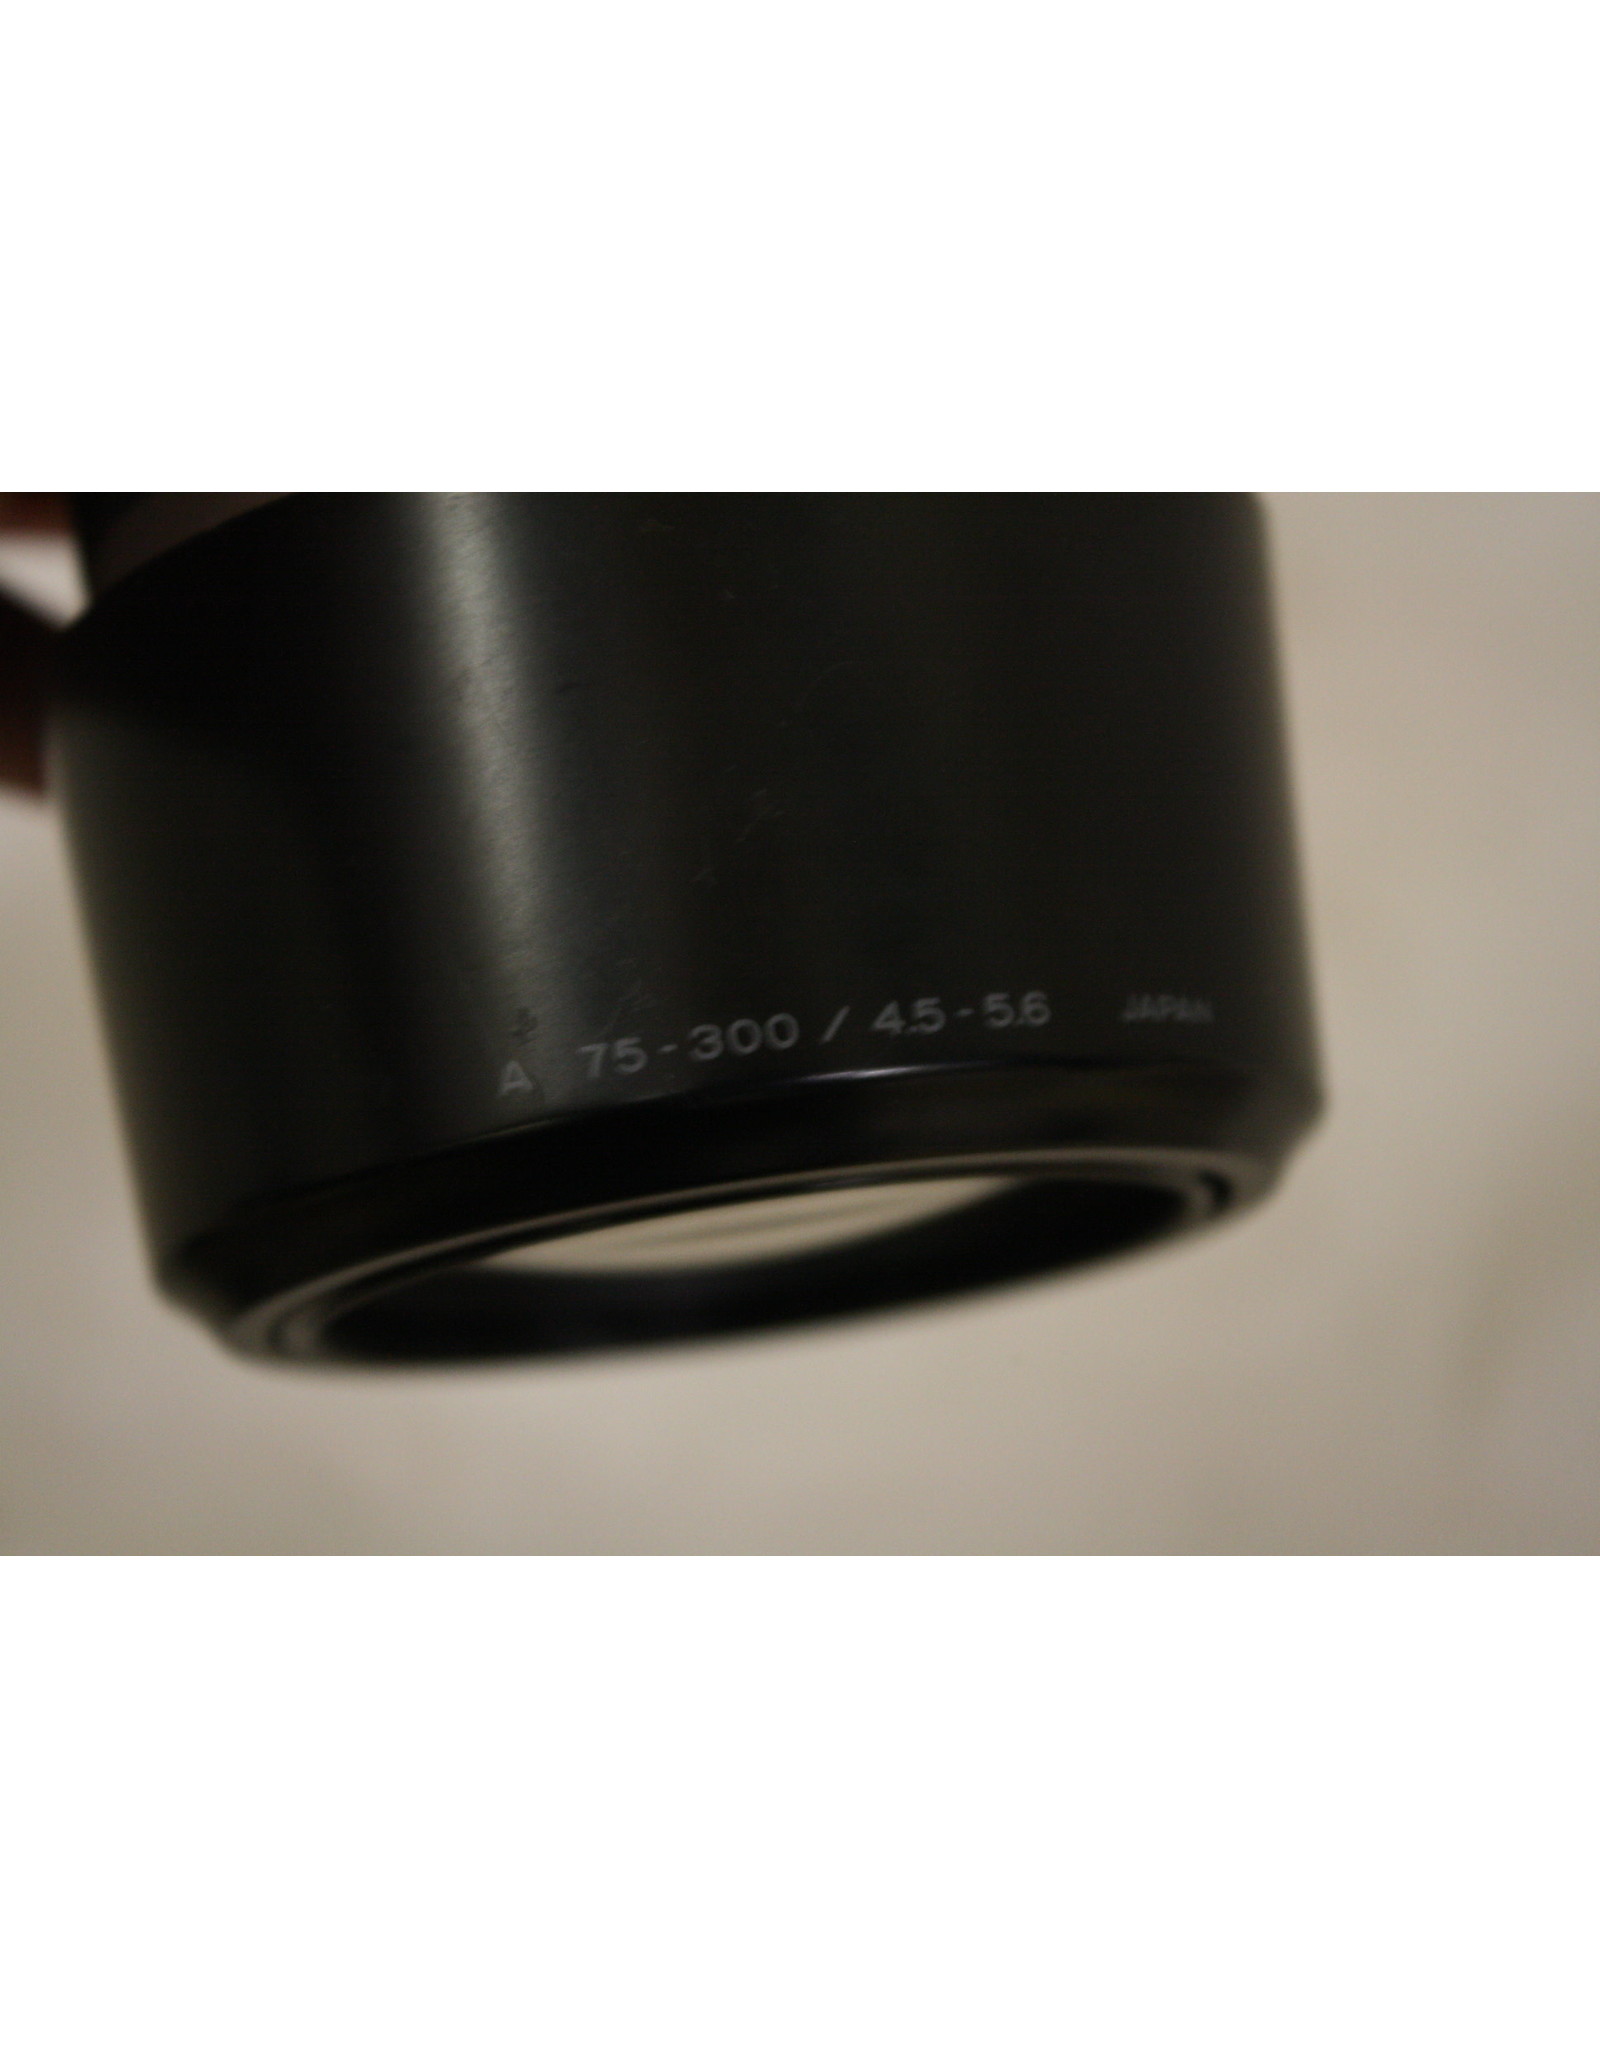 Konica Minolta Minolta AF Zoom 75-300mm Lens (Pre-Owned)